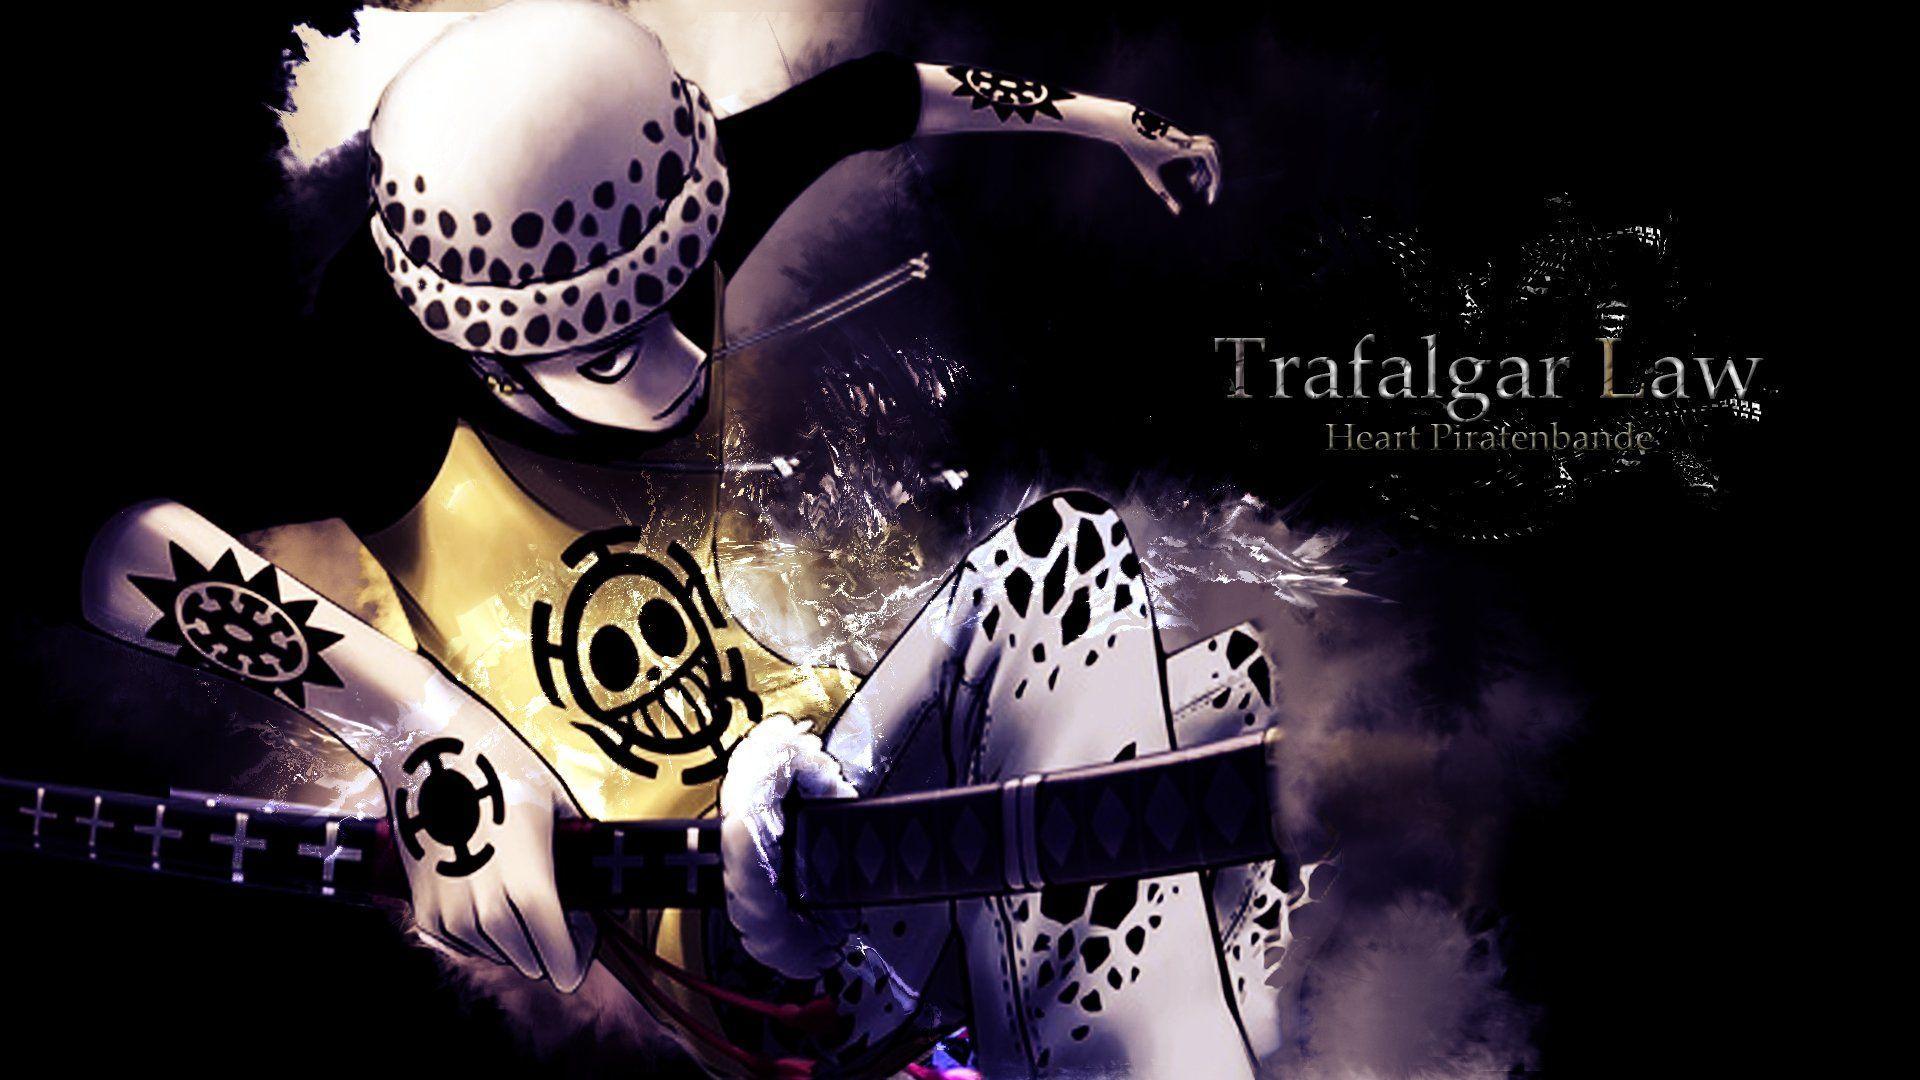 Trafalgar Law HD Wallpaper and Background Image